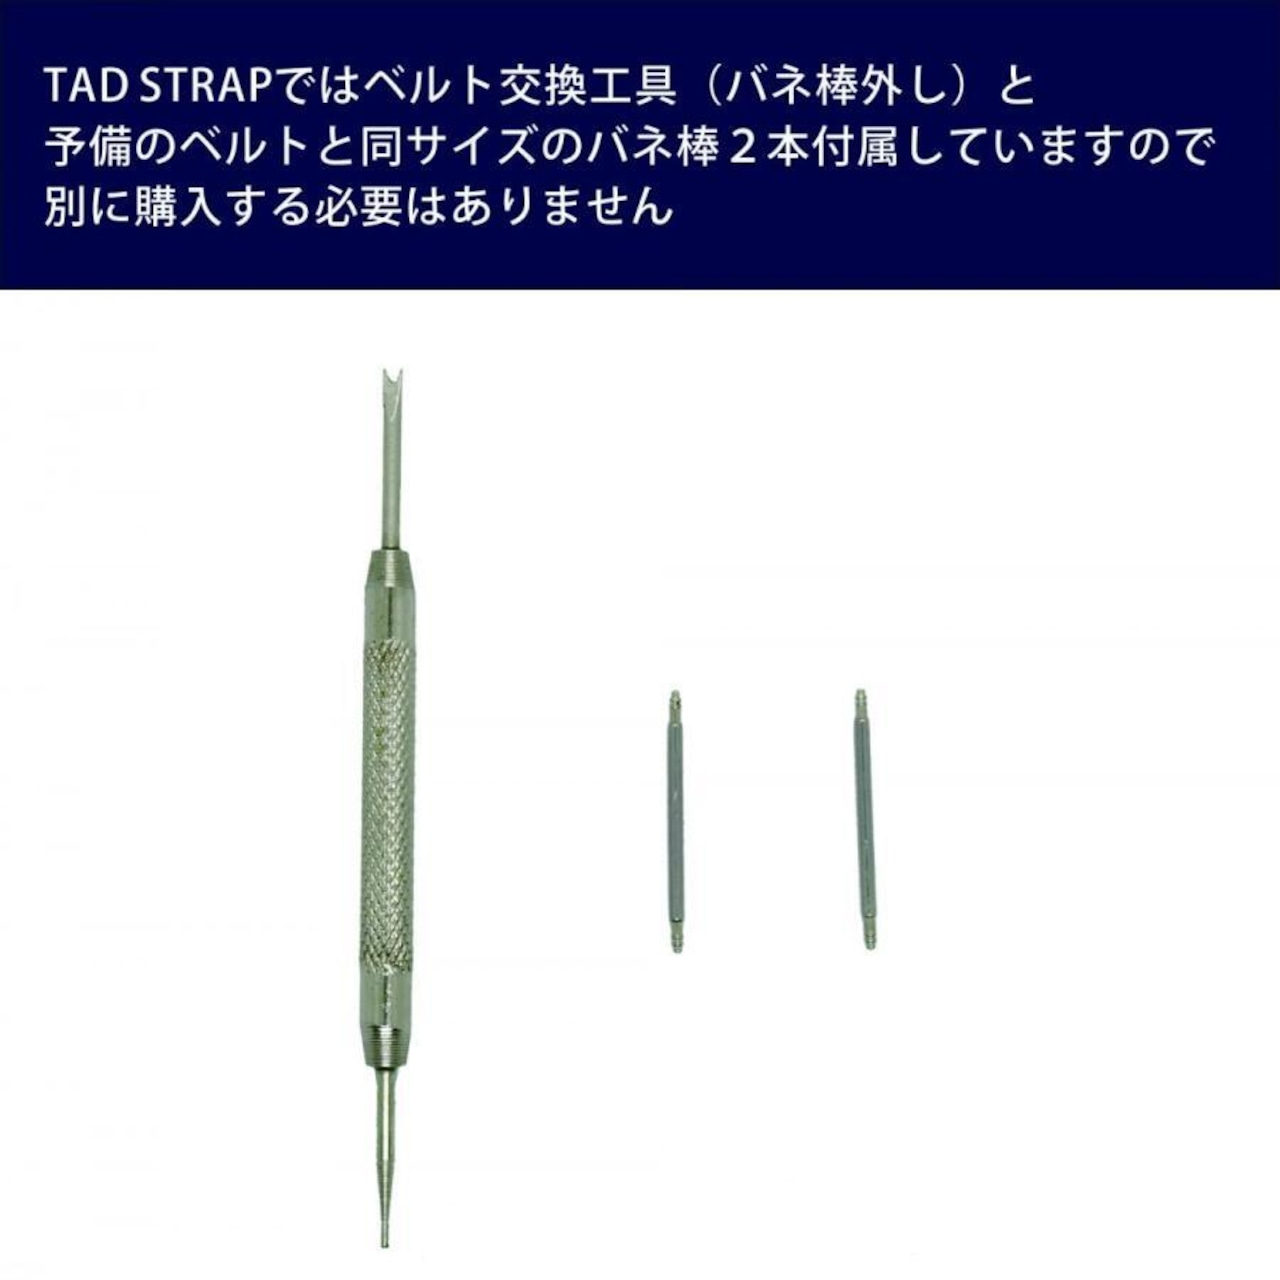 TAD STRAP Checkerflag wht  NATOストラップ  18/20mm 腕時計ベルト